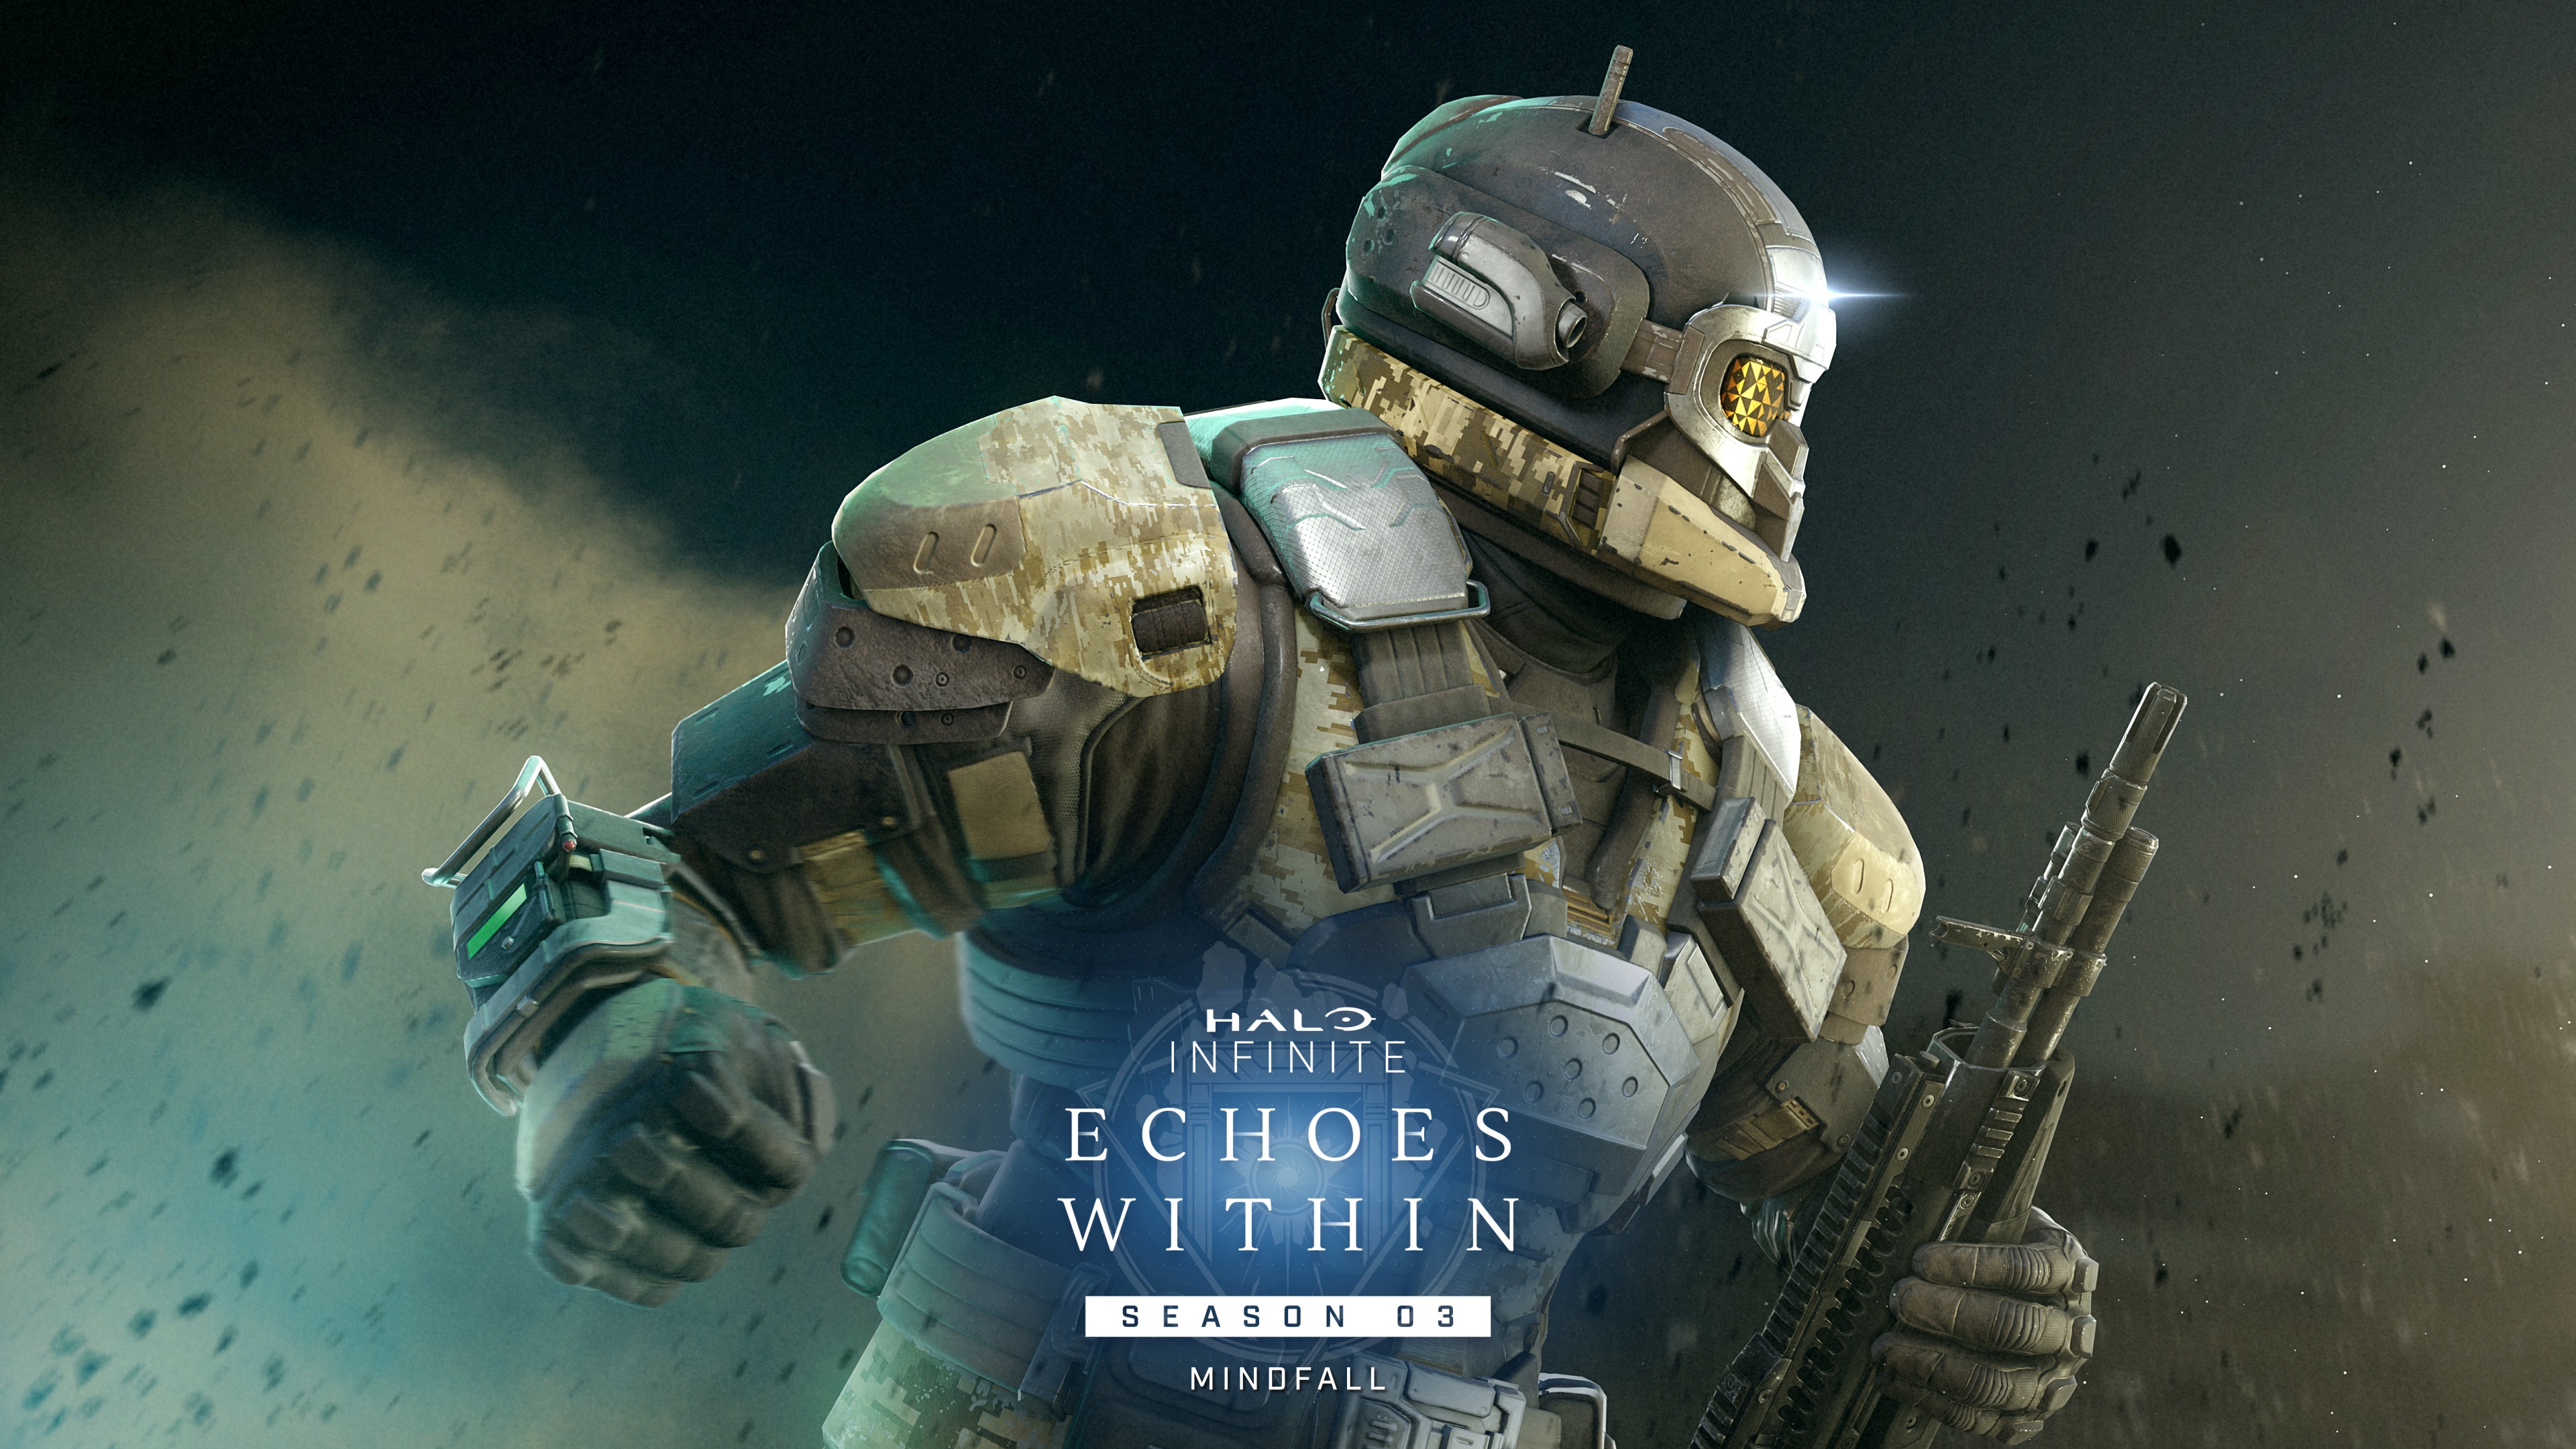 Temporada 3 de Halo Infinite, Echoes Within, já está disponível